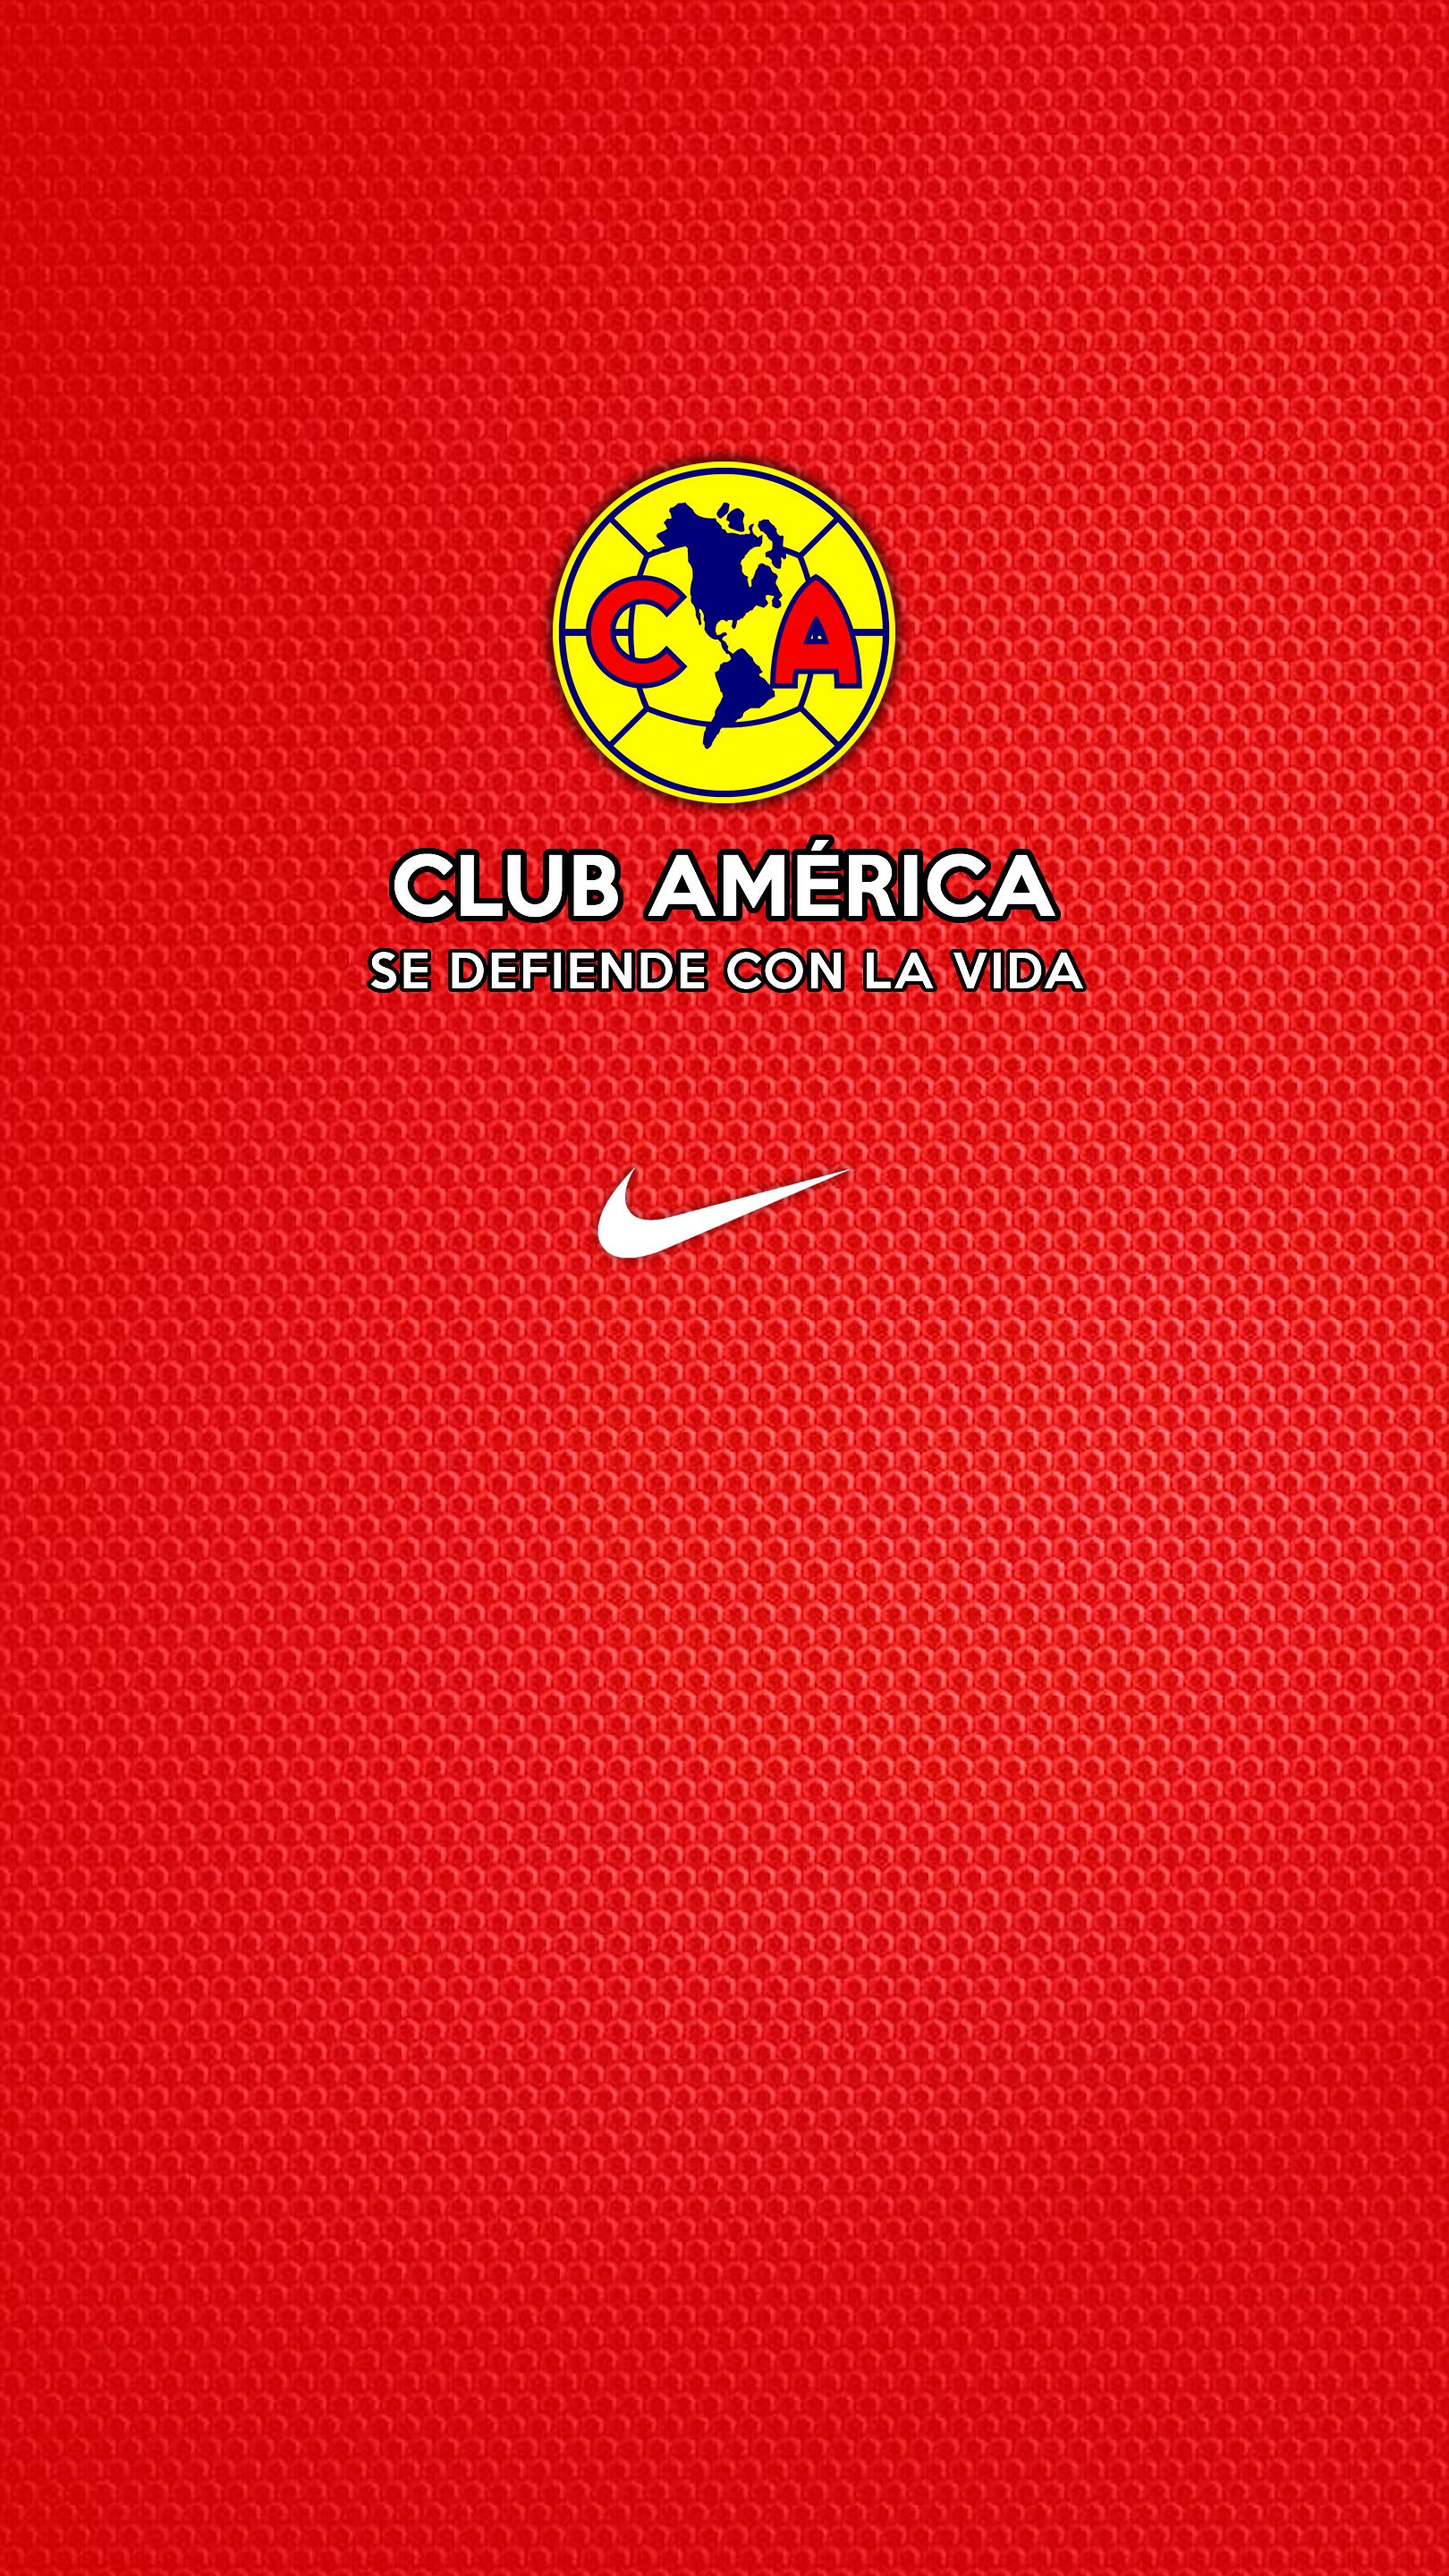 Club America Smartphone Wallpaper byGoloteHD 06 - Picoolio - Free ...